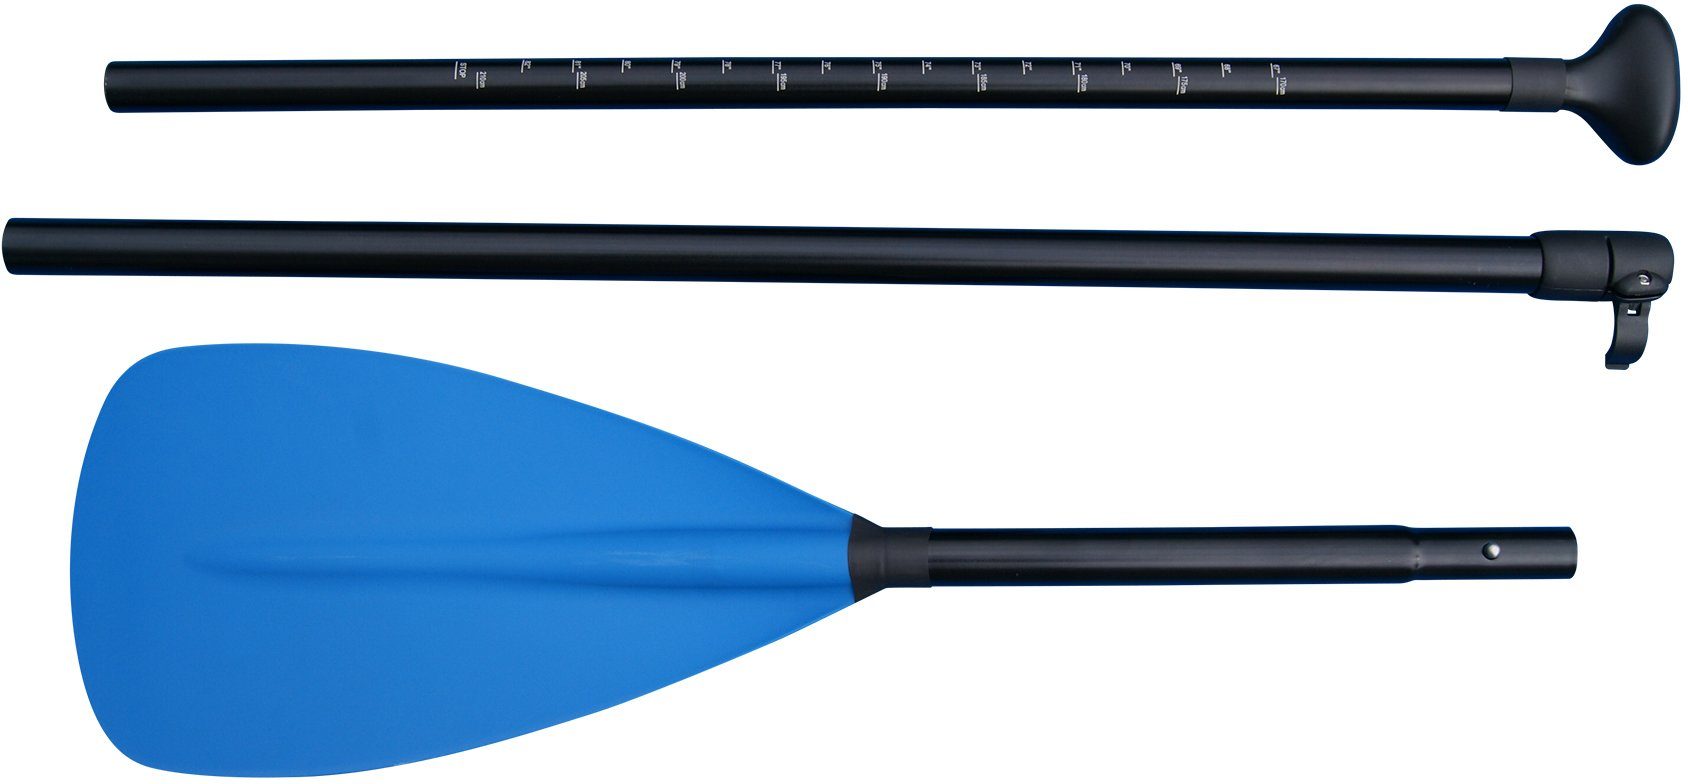 SUP-Board KOHALA Kohala, tlg) blau/weiss (6 Inflatable